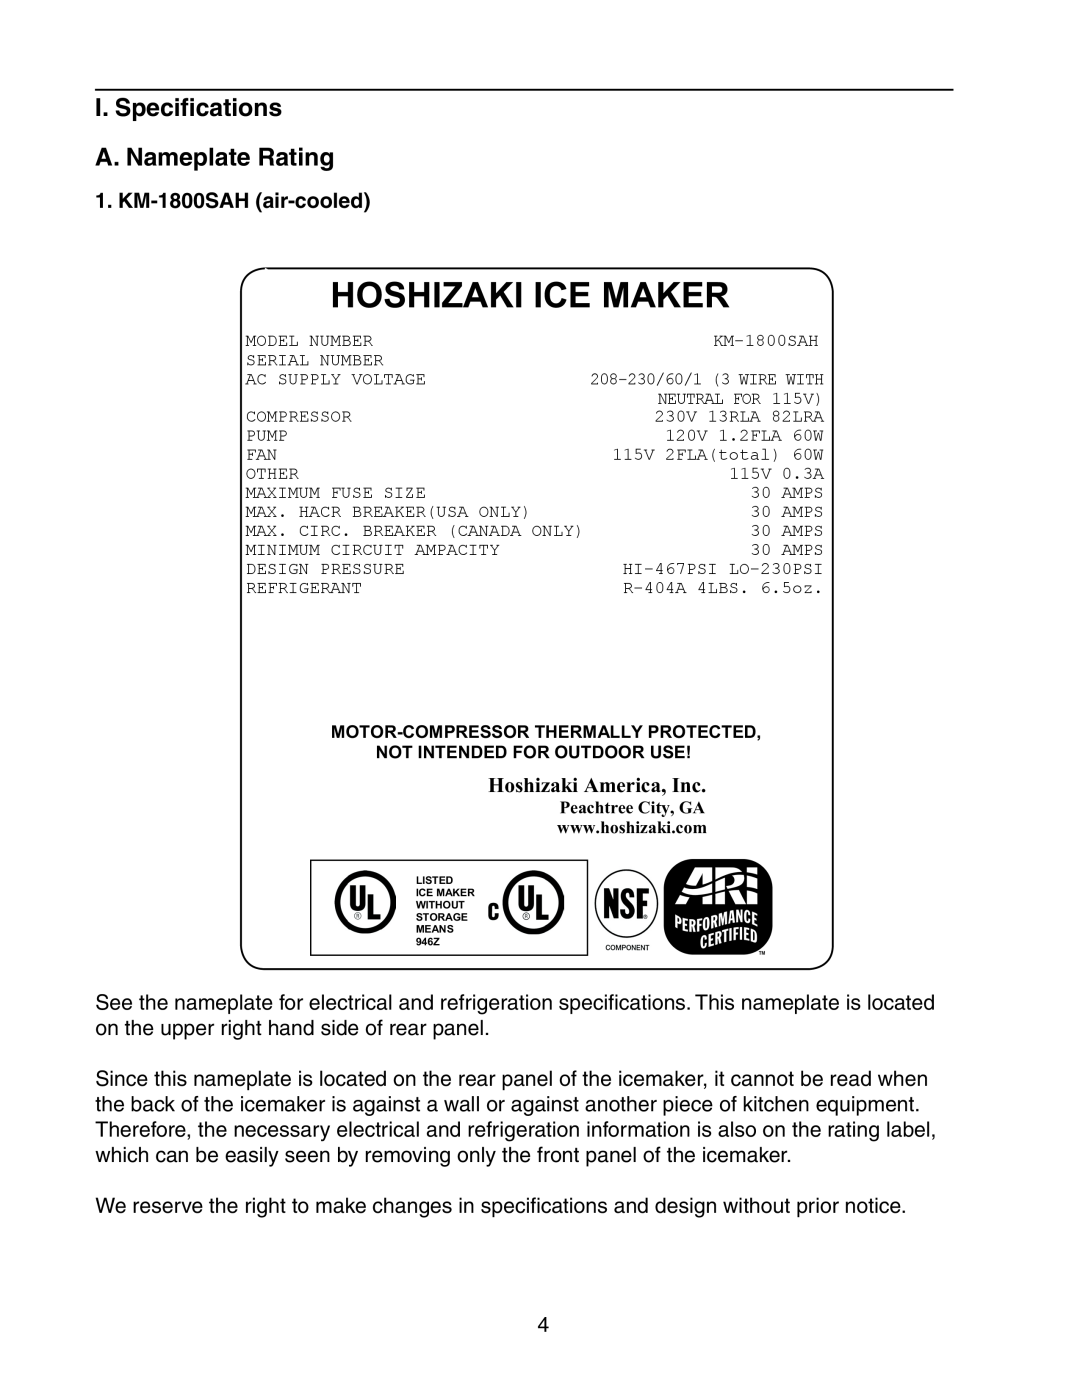 Hoshizaki KM-1800SWH/3, KM-1800SRH/3 Hoshizaki Ice Maker, I. Specifications A. Nameplate Rating, KM-1800SAH air-cooled 